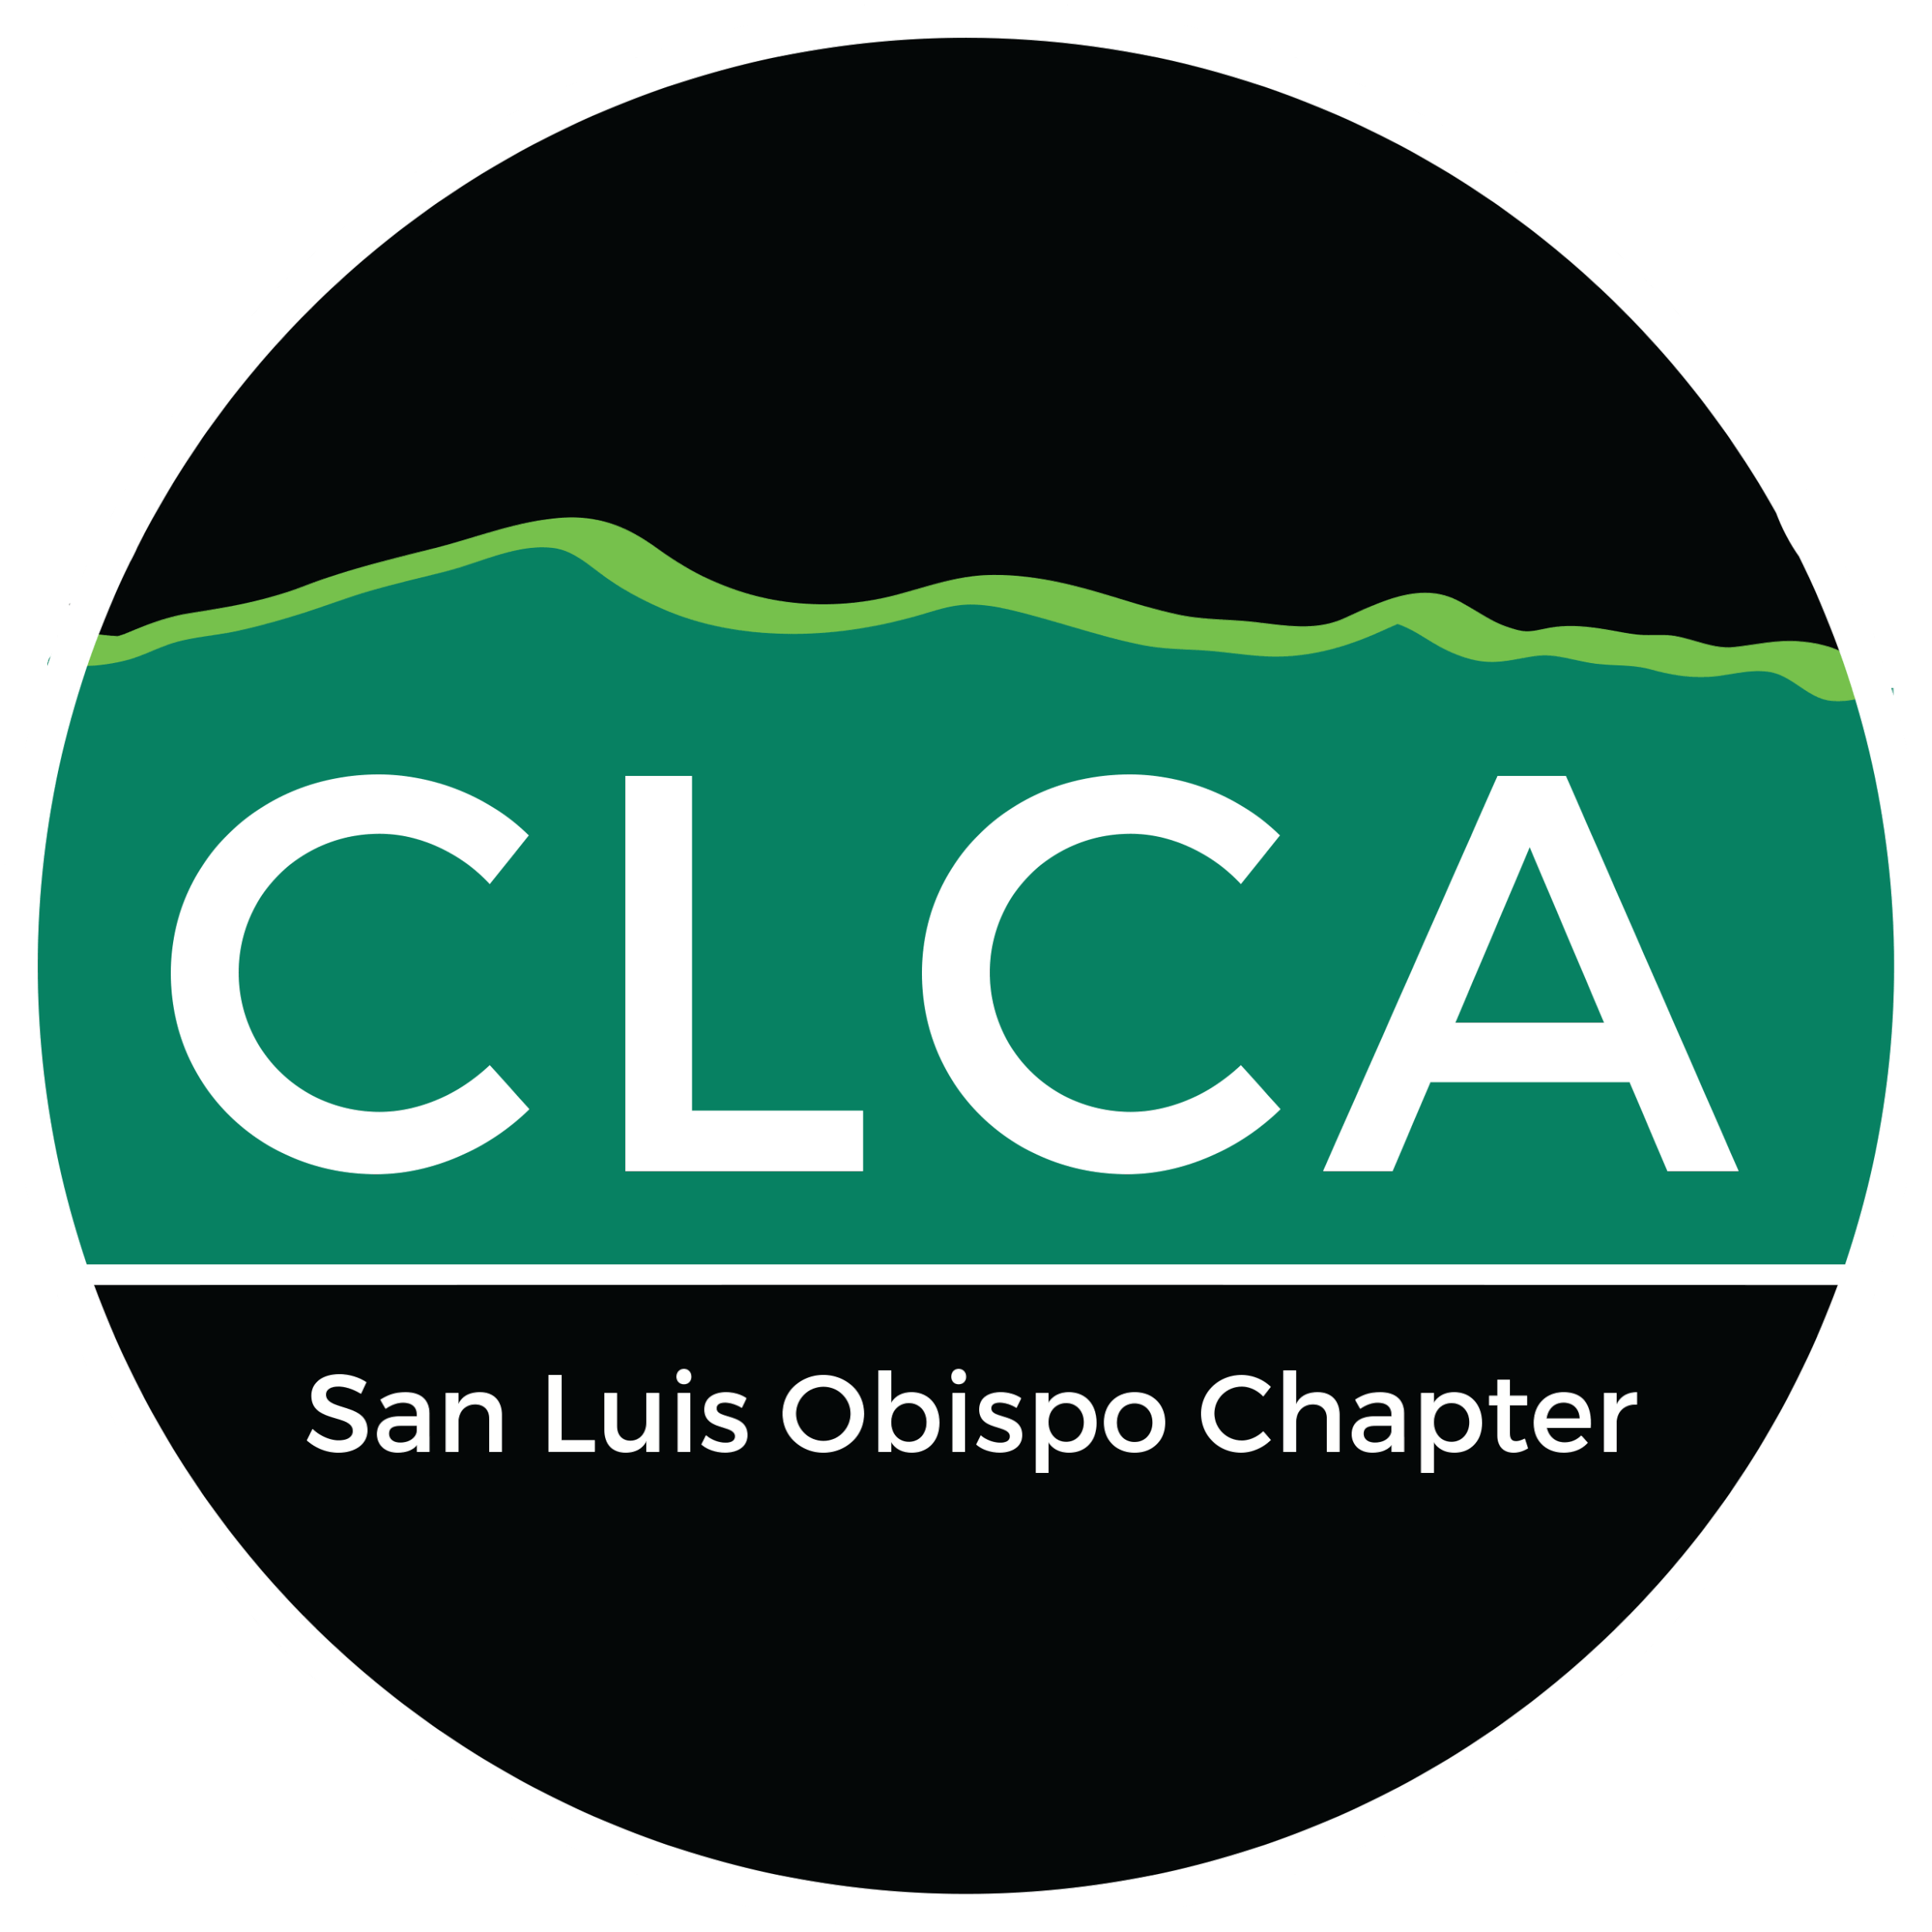 CLCA San Luis Obispo Chapter